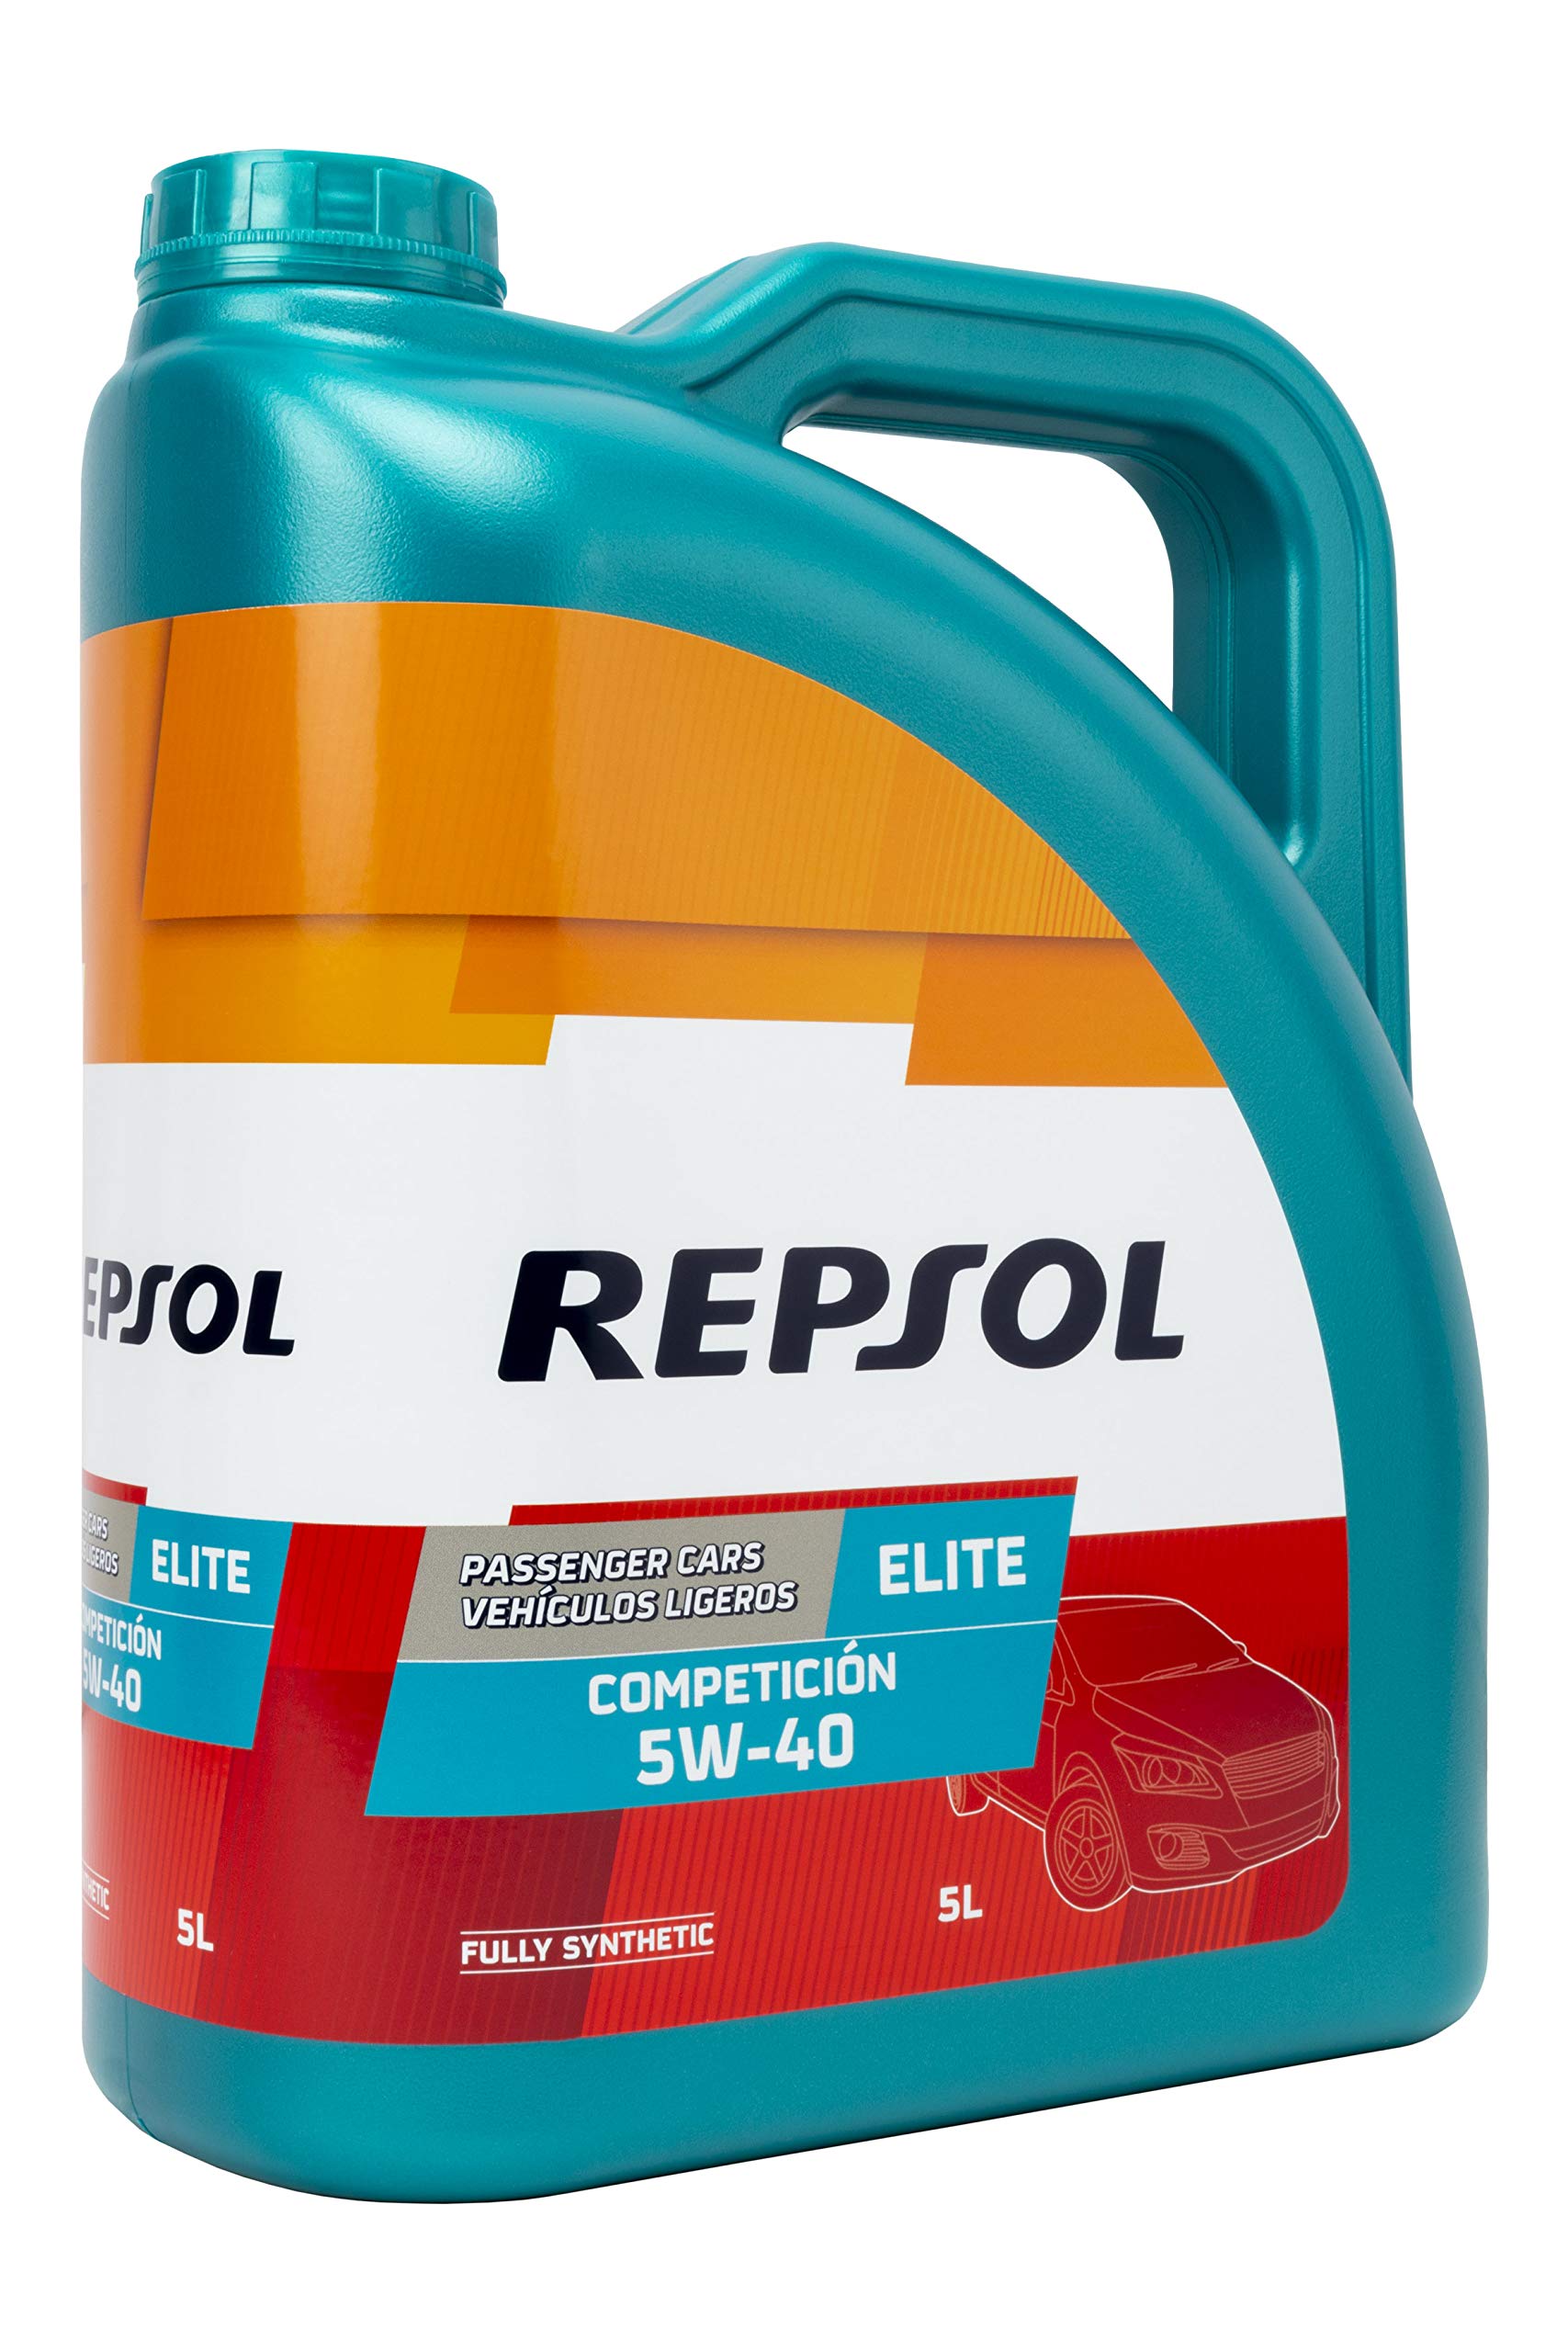 Repsol 540653 Motoröle Elite COMPETICION 5W40 5 Lt, Transparent/Golden, 5L von Repsol